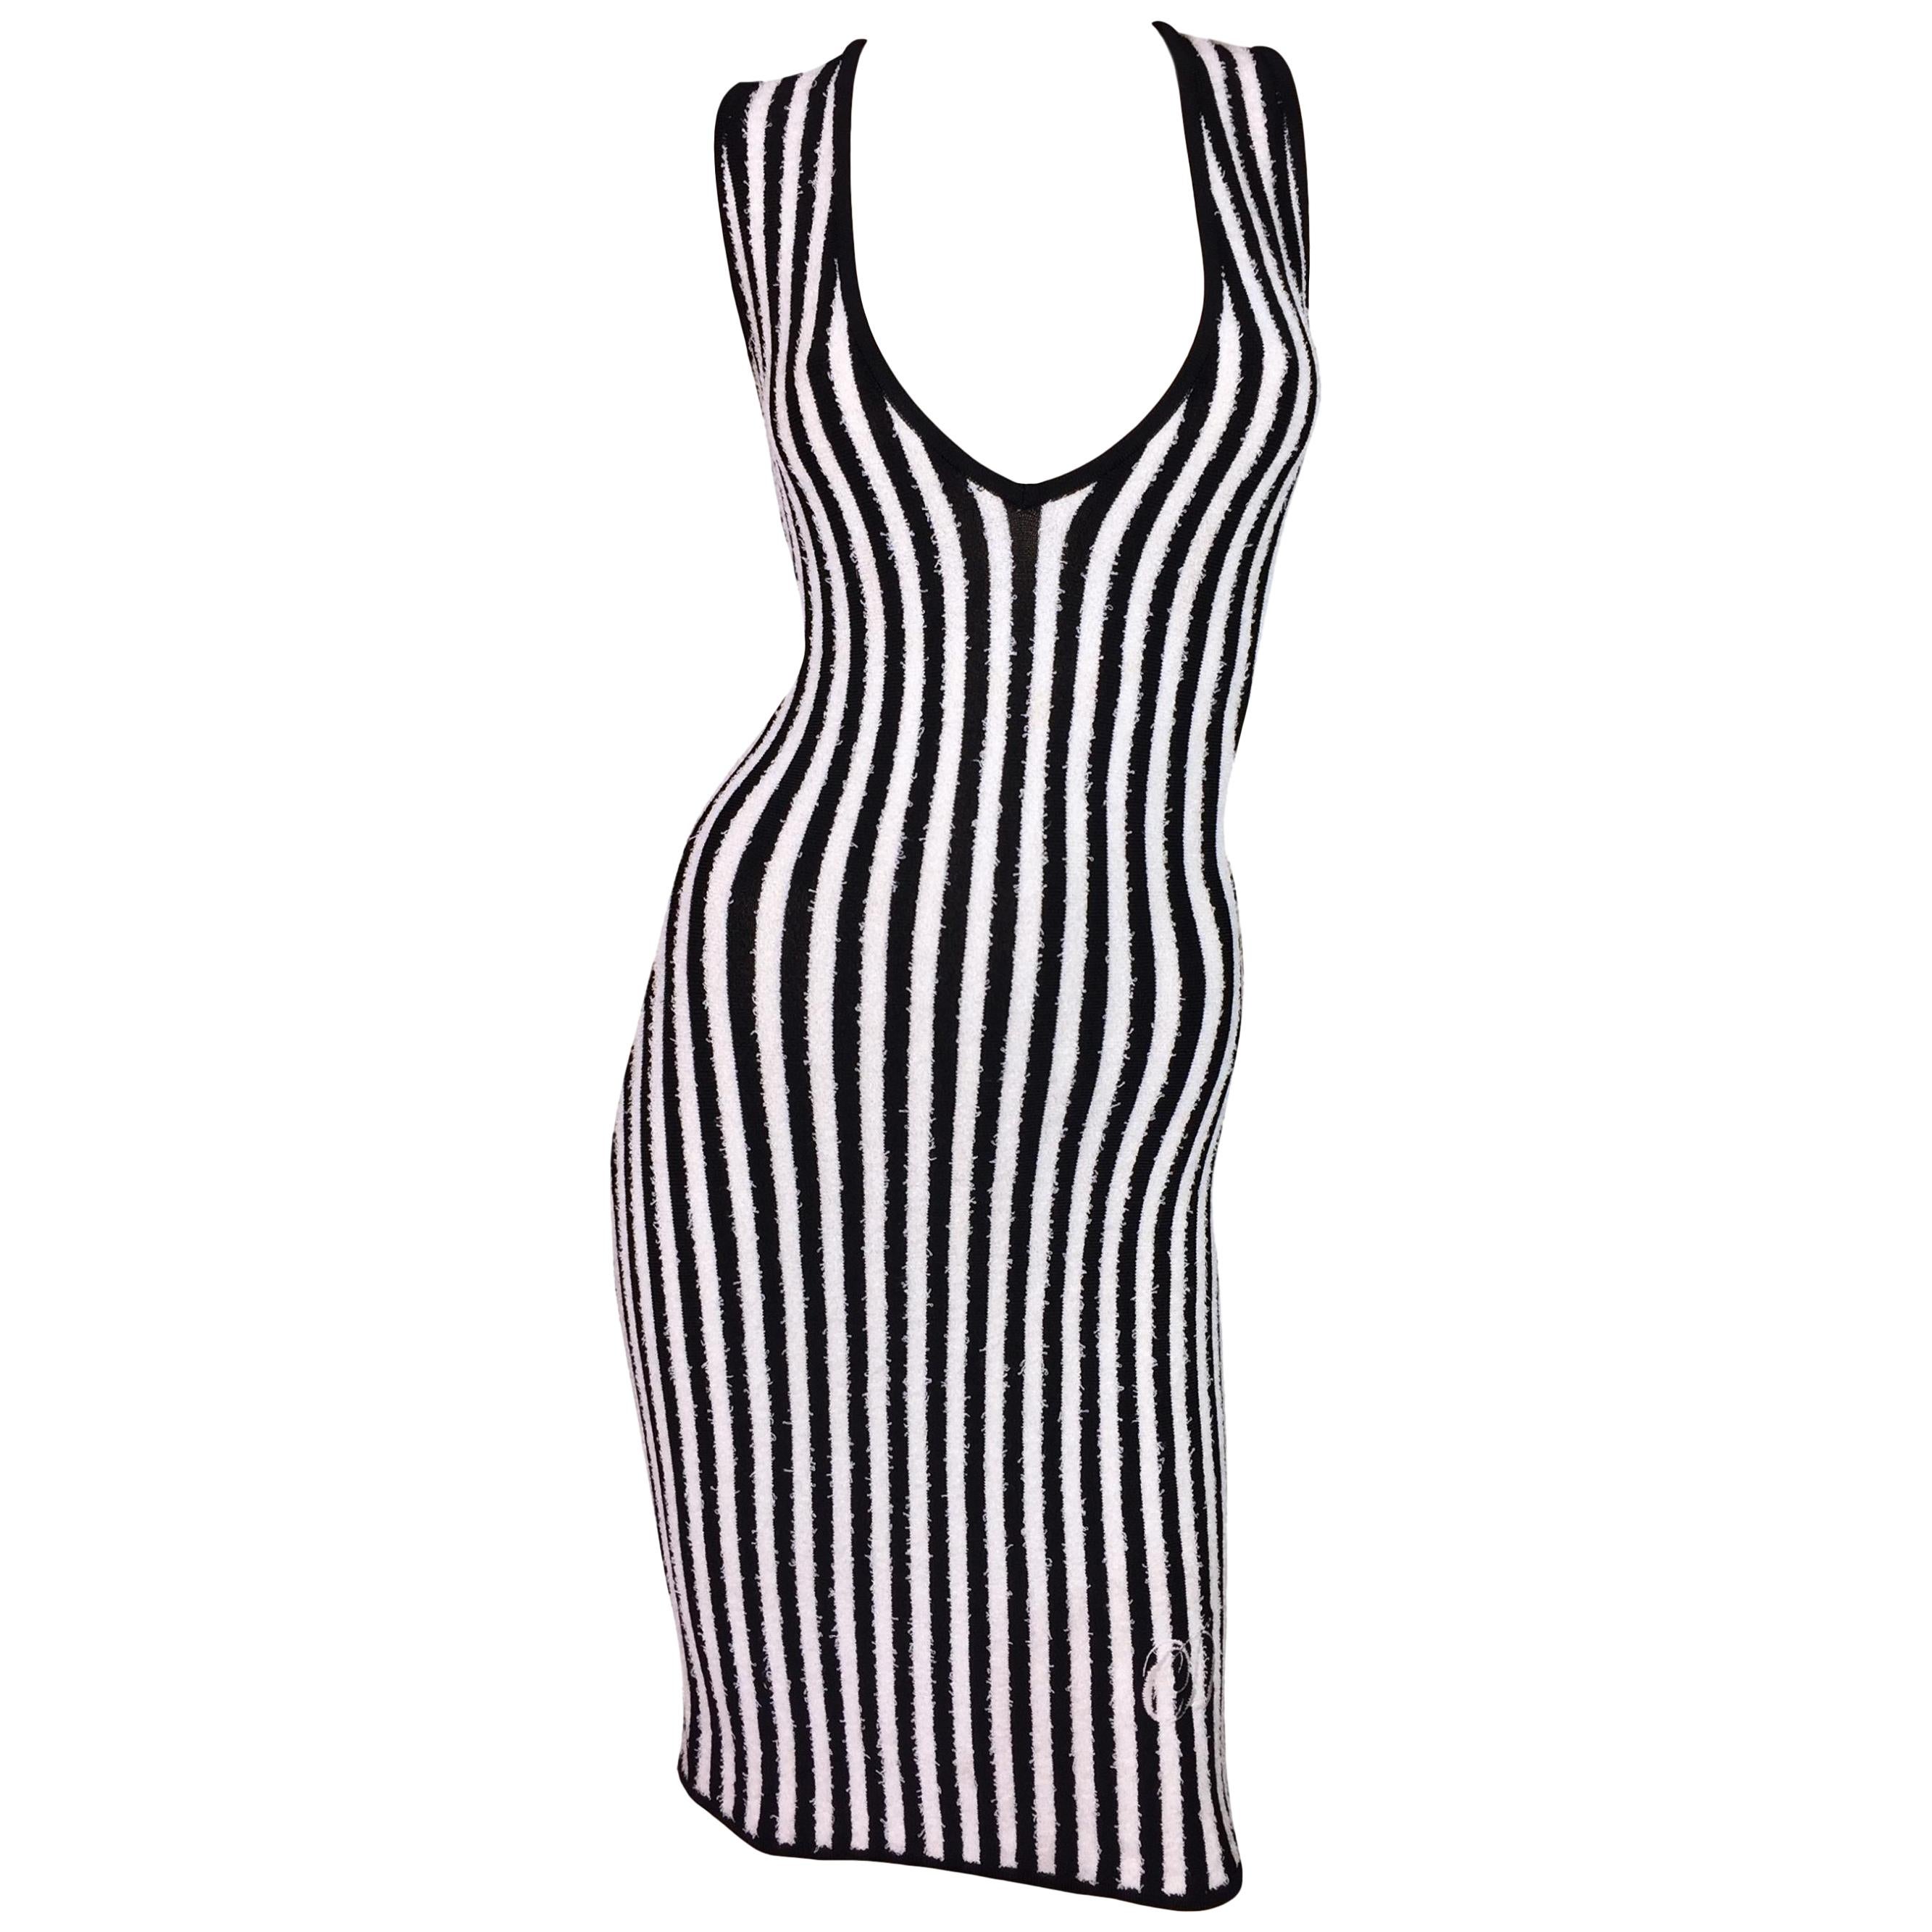 S/S 1997 Christian Dior Black & White Stripe Plunging Bodycon Wiggle Dress